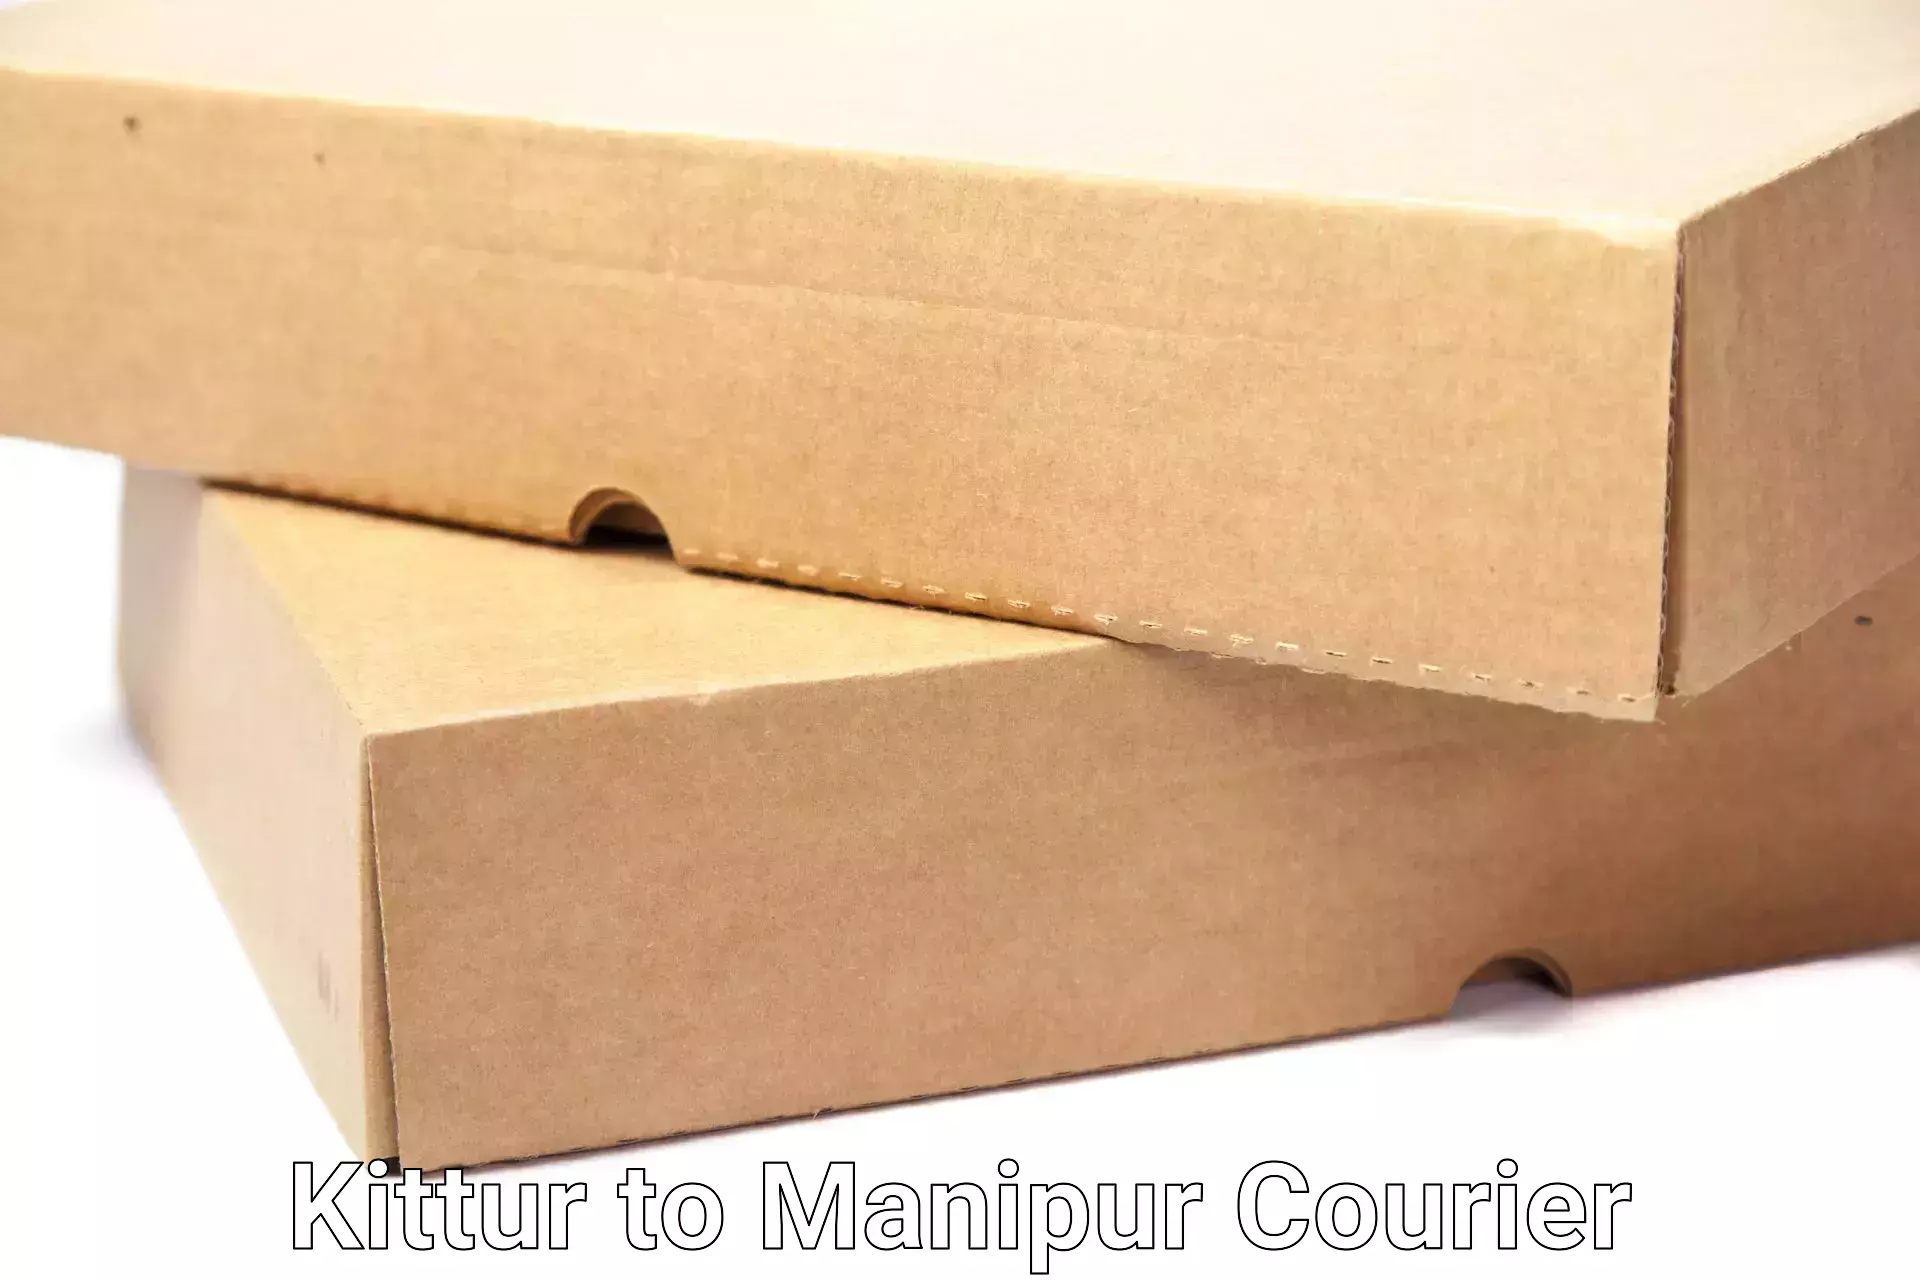 Quality moving company Kittur to Churachandpur